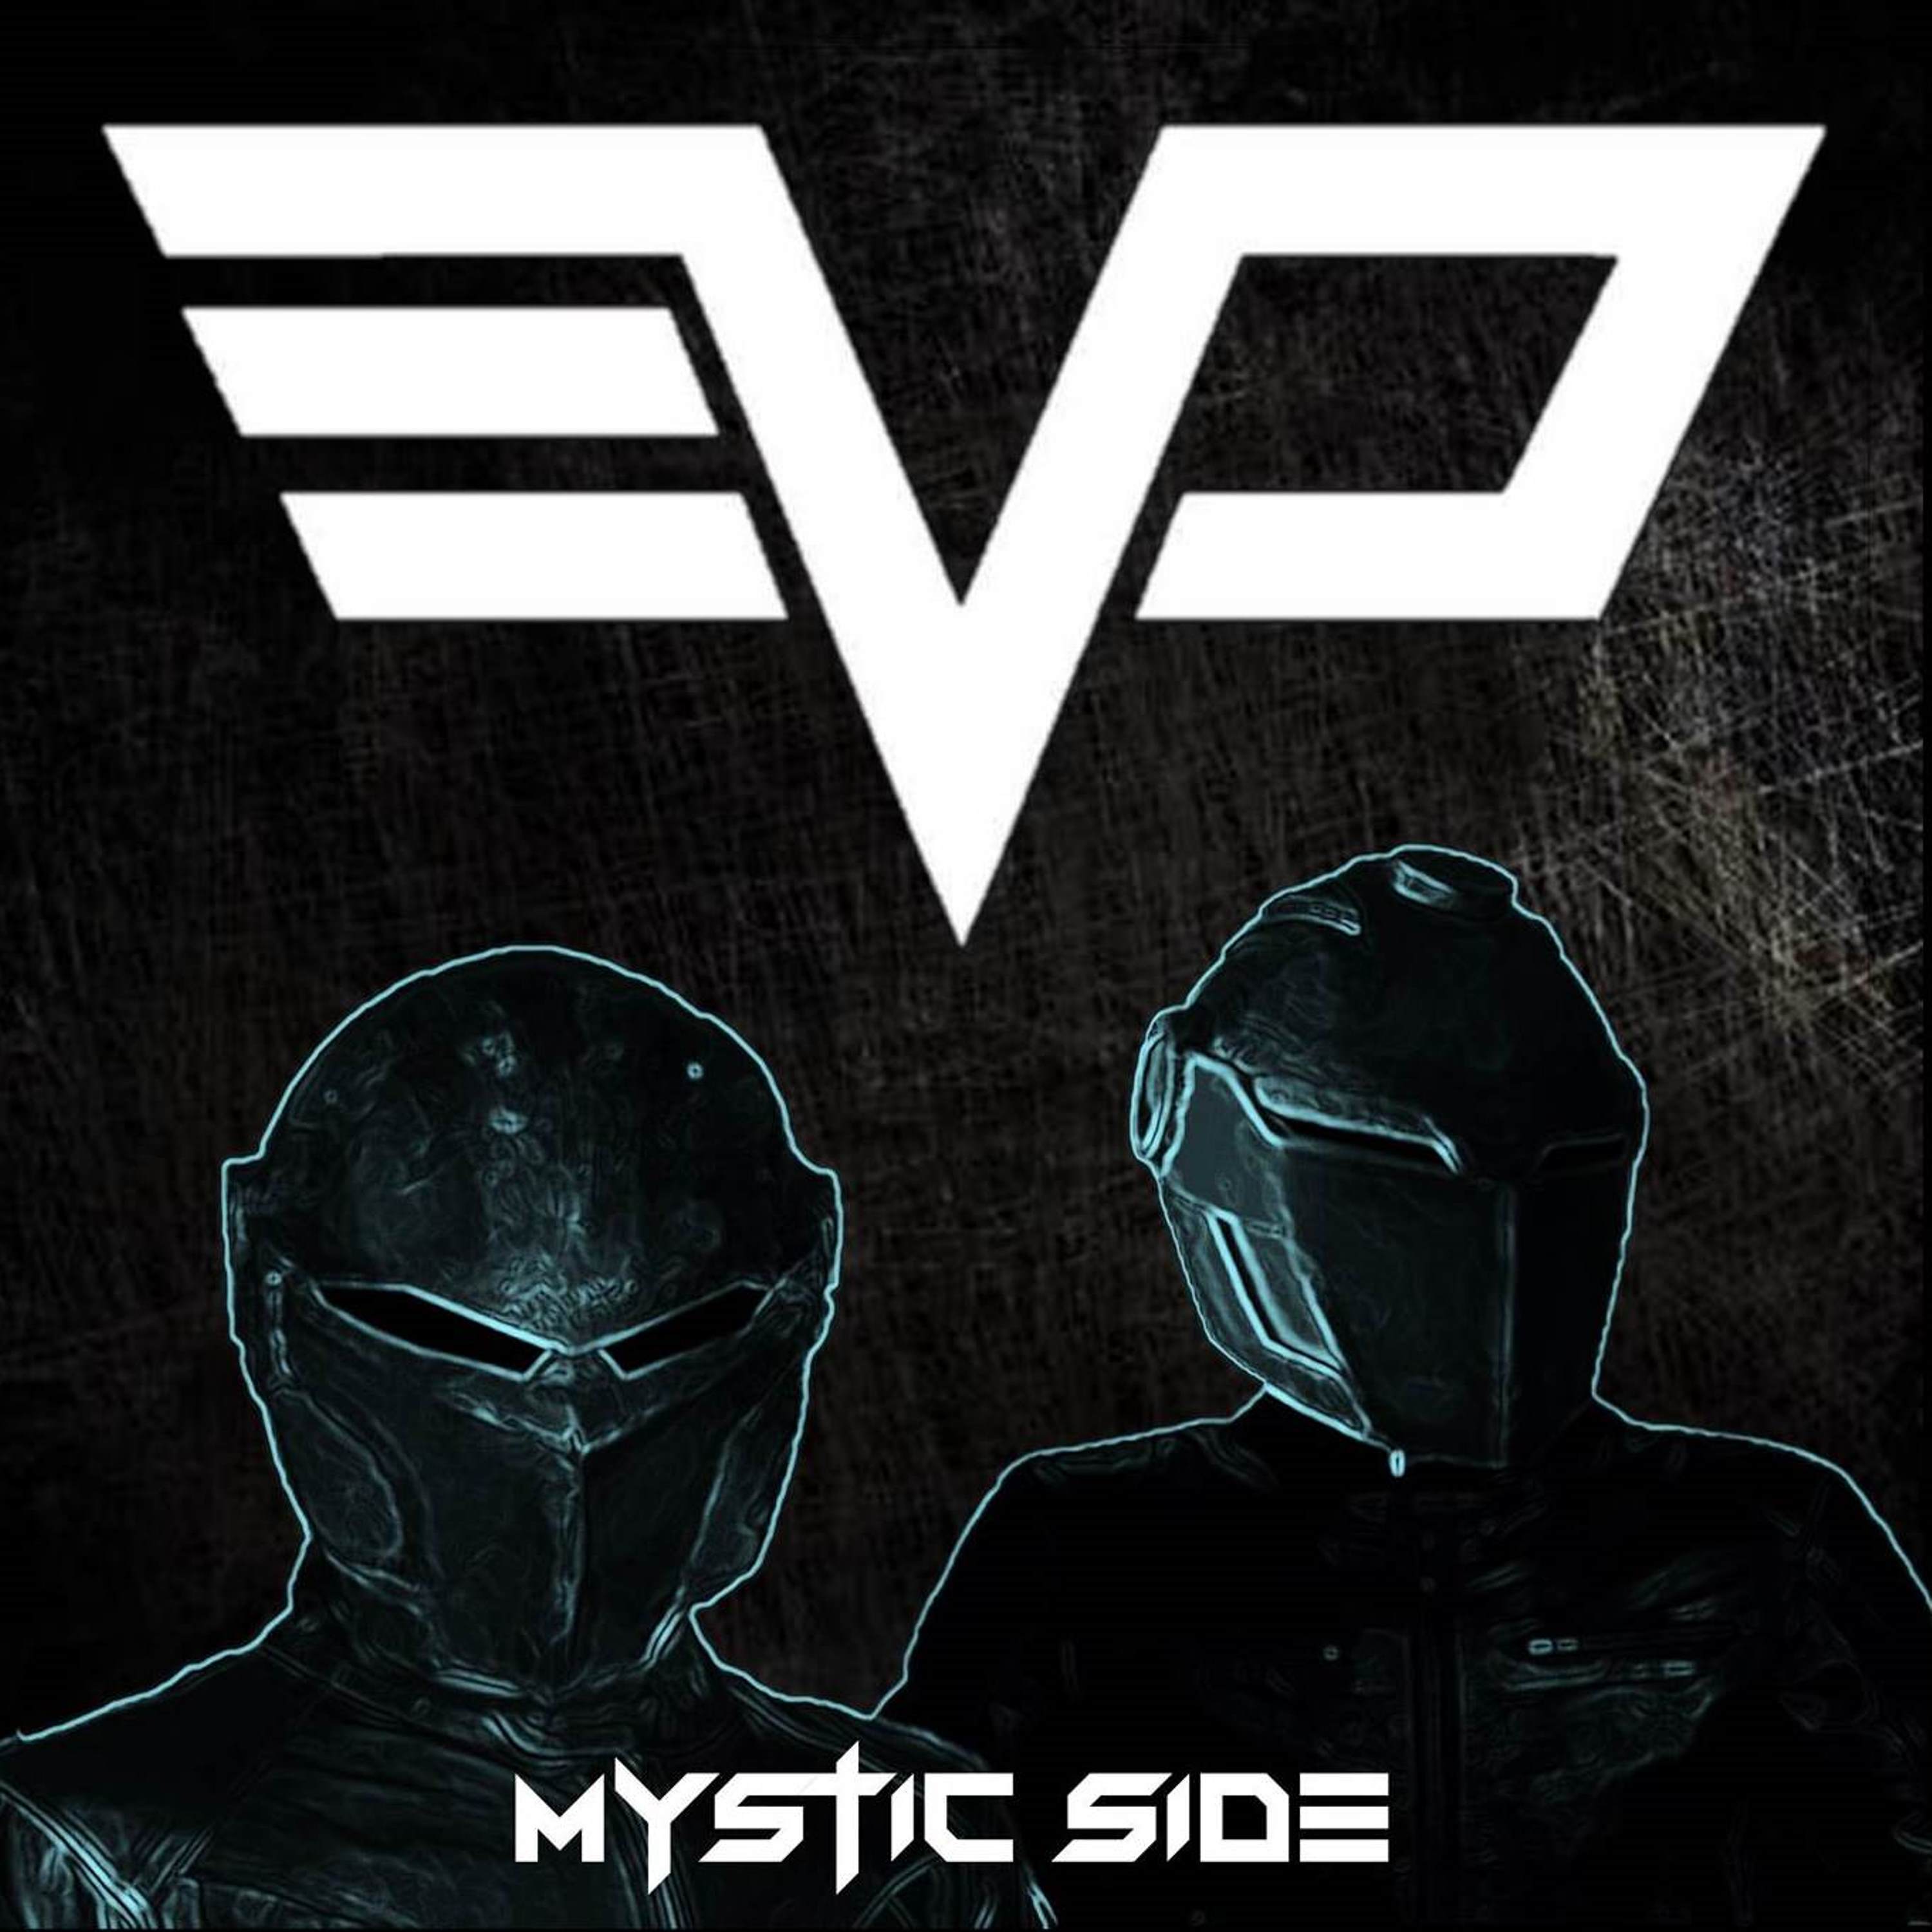 Evo mystic side by Evo